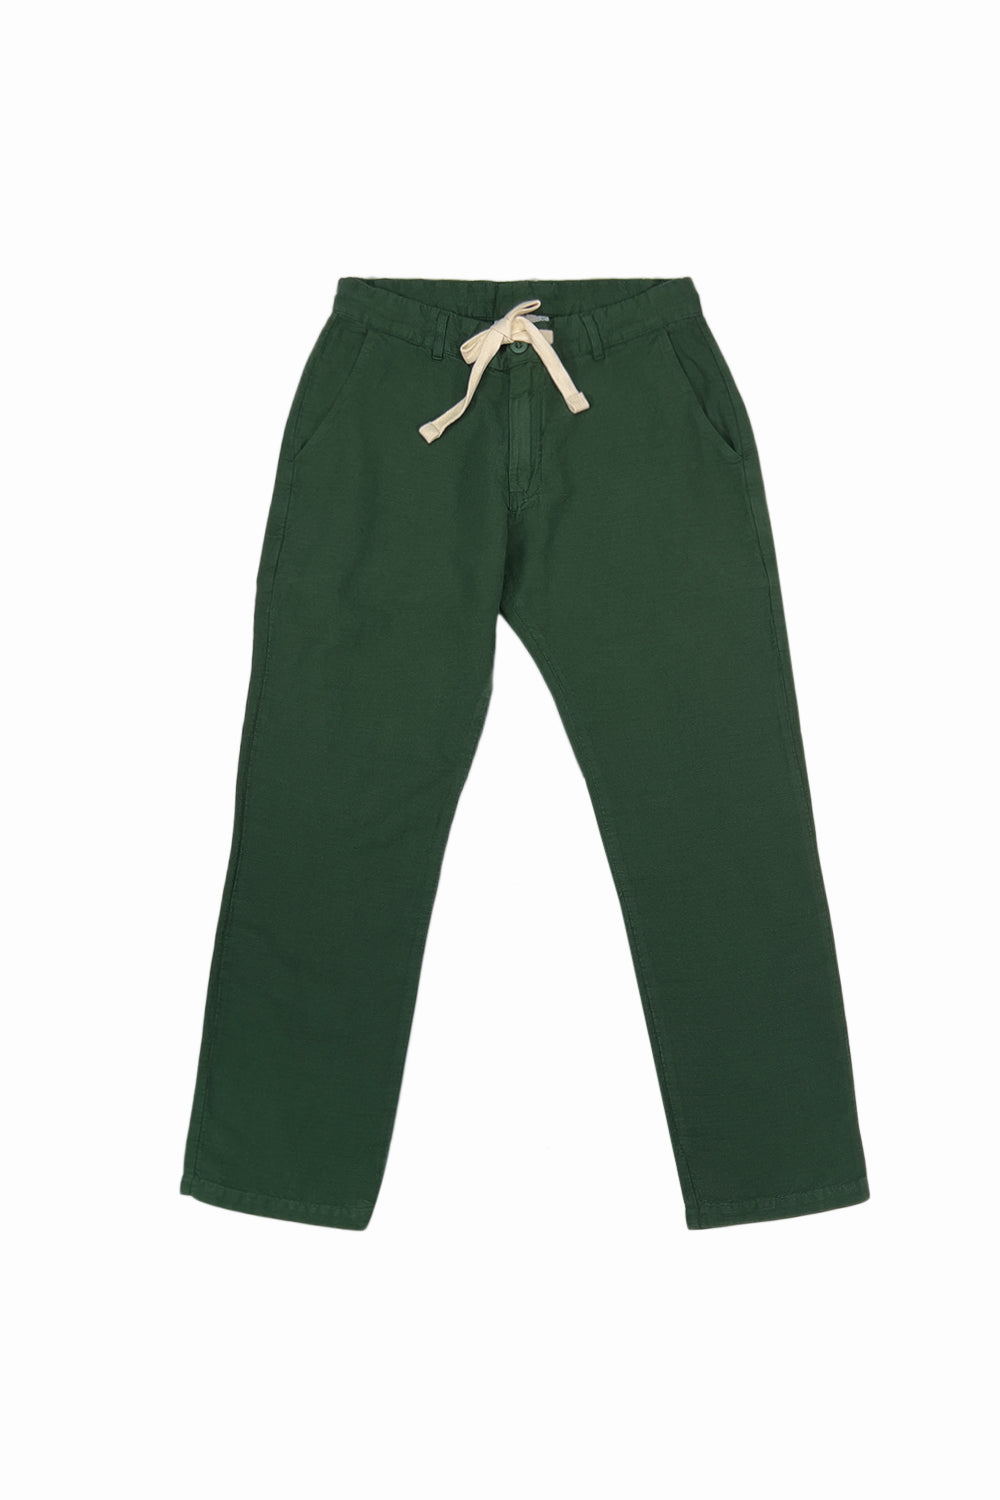 Traverse Pant | Jungmaven Hemp Clothing & Accessories / Color: Hunter Green